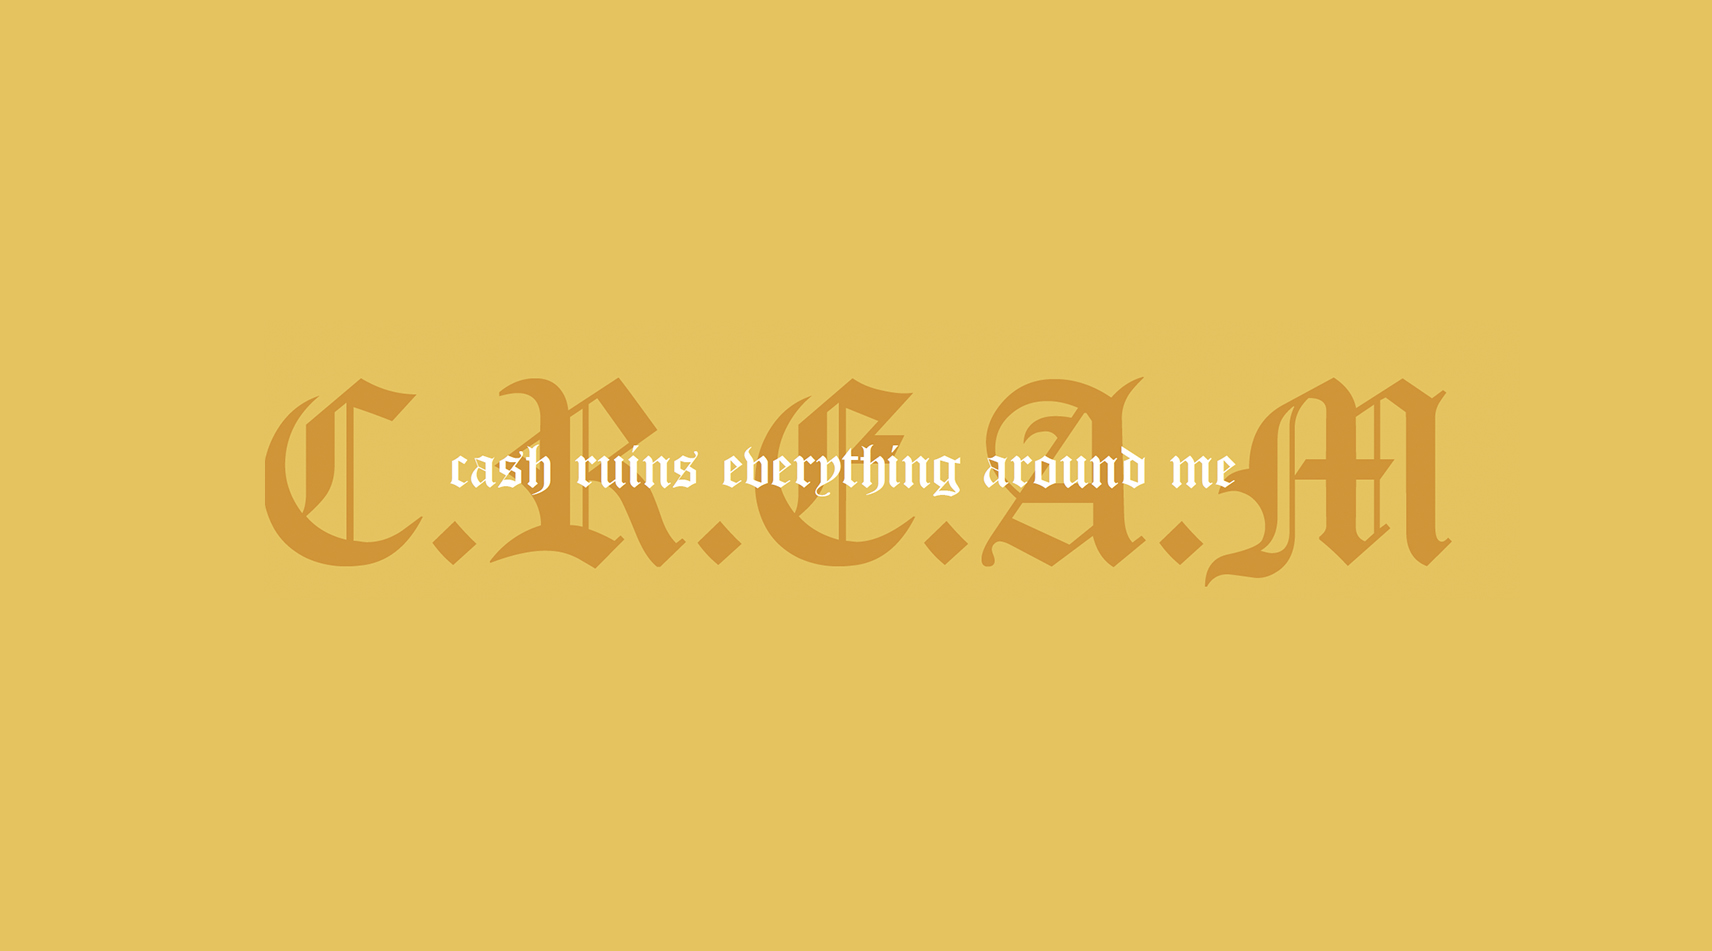 Cash Ruins Everything Around Me image